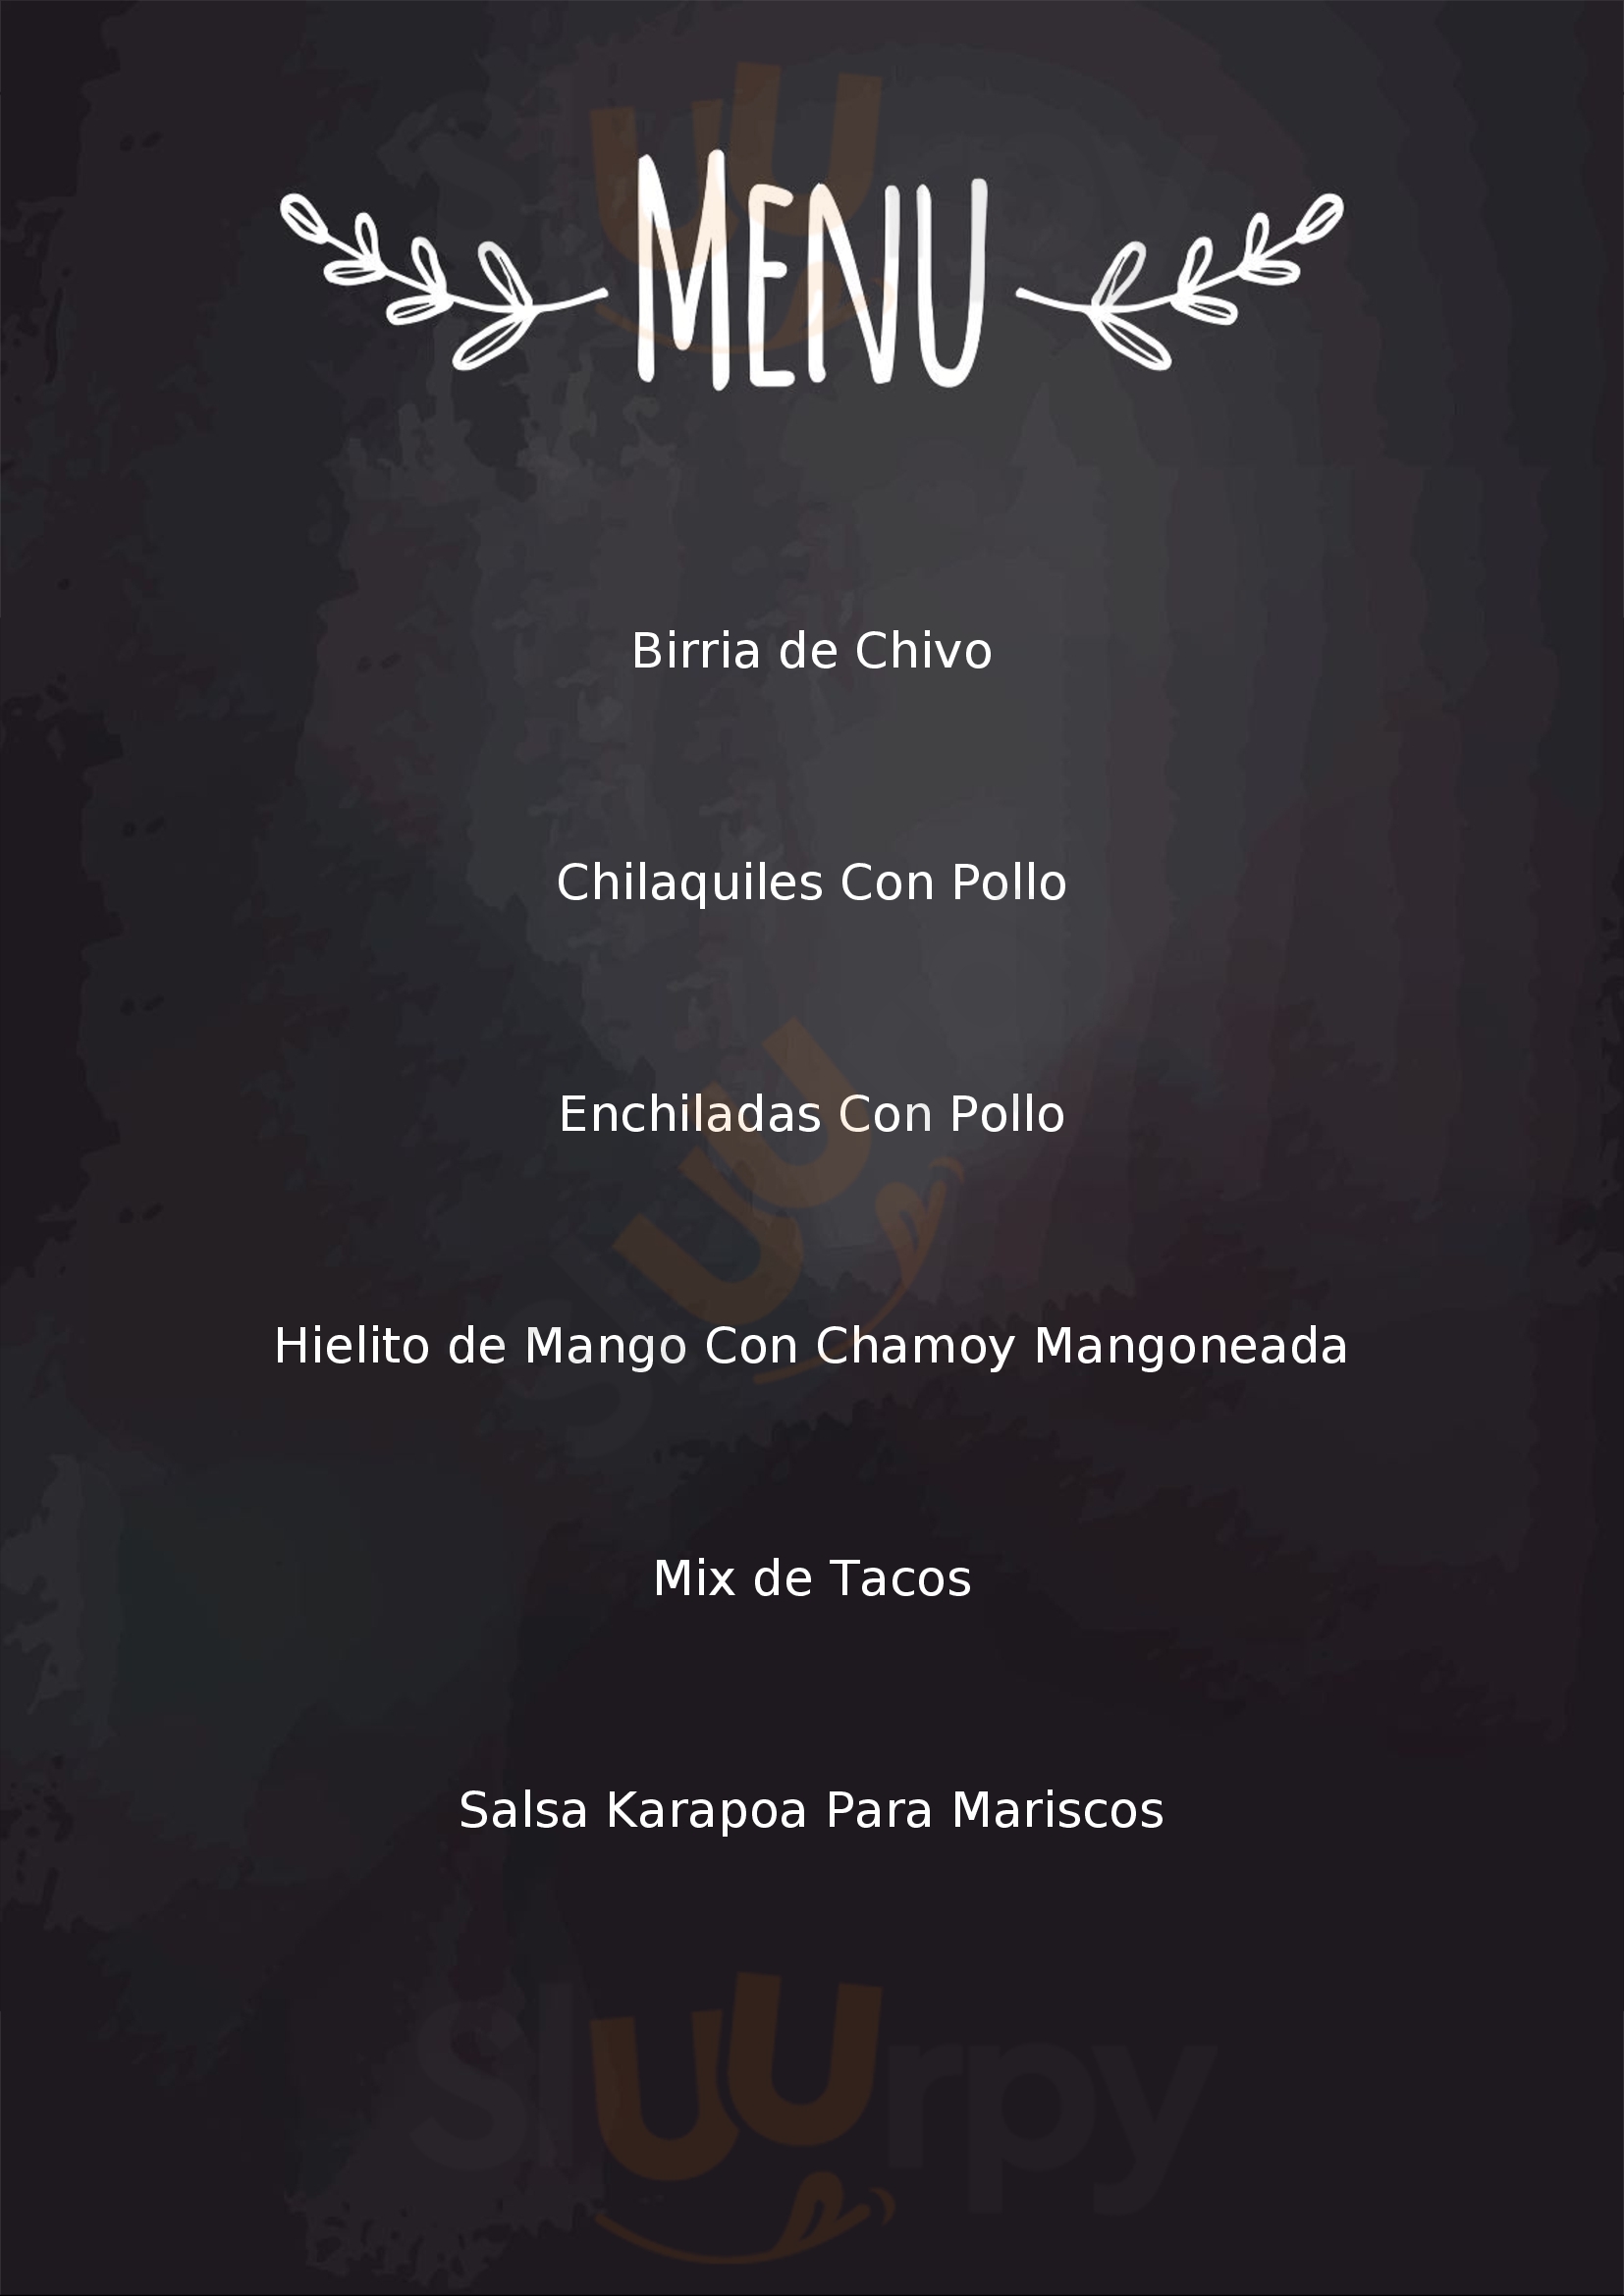 Restaurant Carolina Batopilas Menu - 1